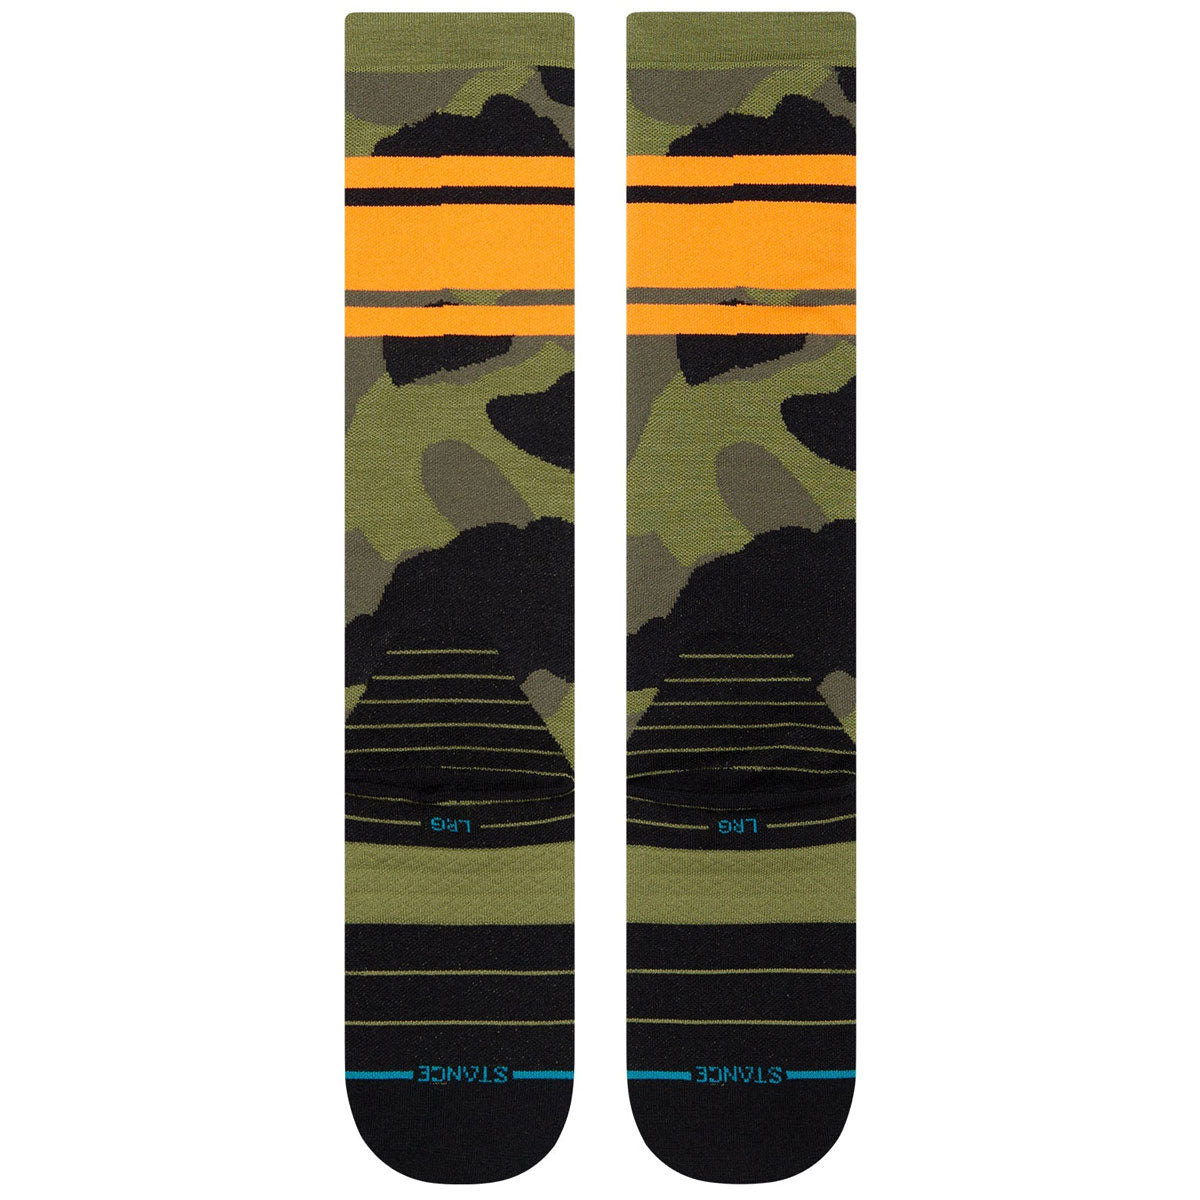 Stance Sargent Snowboard Socks - Camo image 3